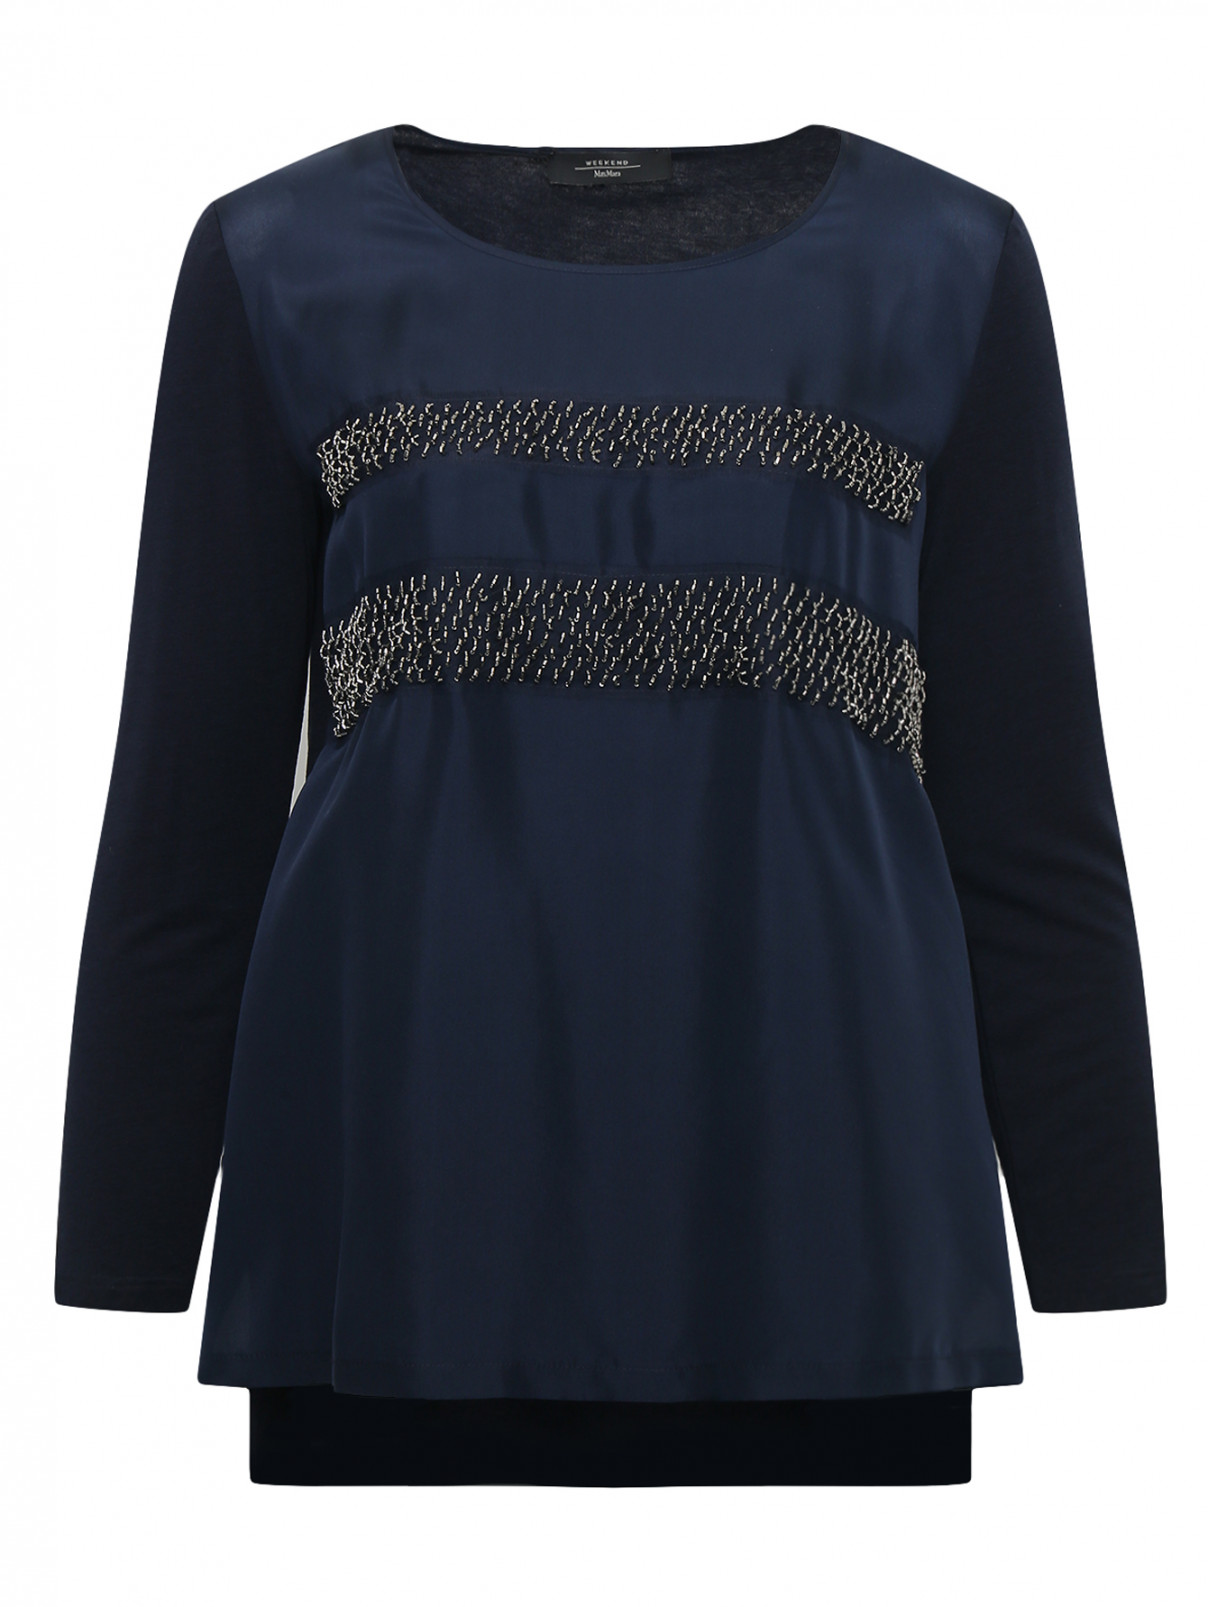 Блуза с декором Weekend Max Mara  –  Общий вид  – Цвет:  Синий